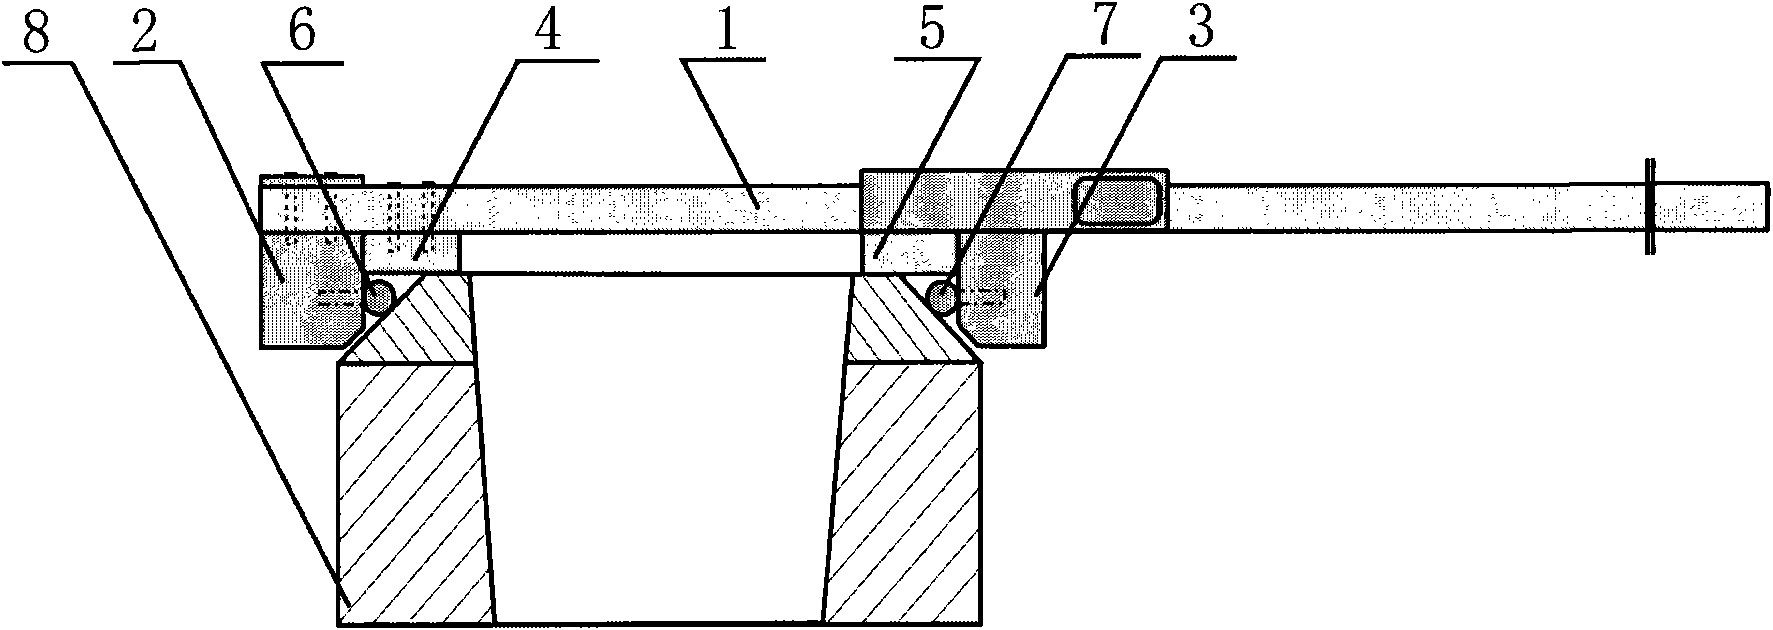 Chamfer diameter measurement method for oil drilling tool connector